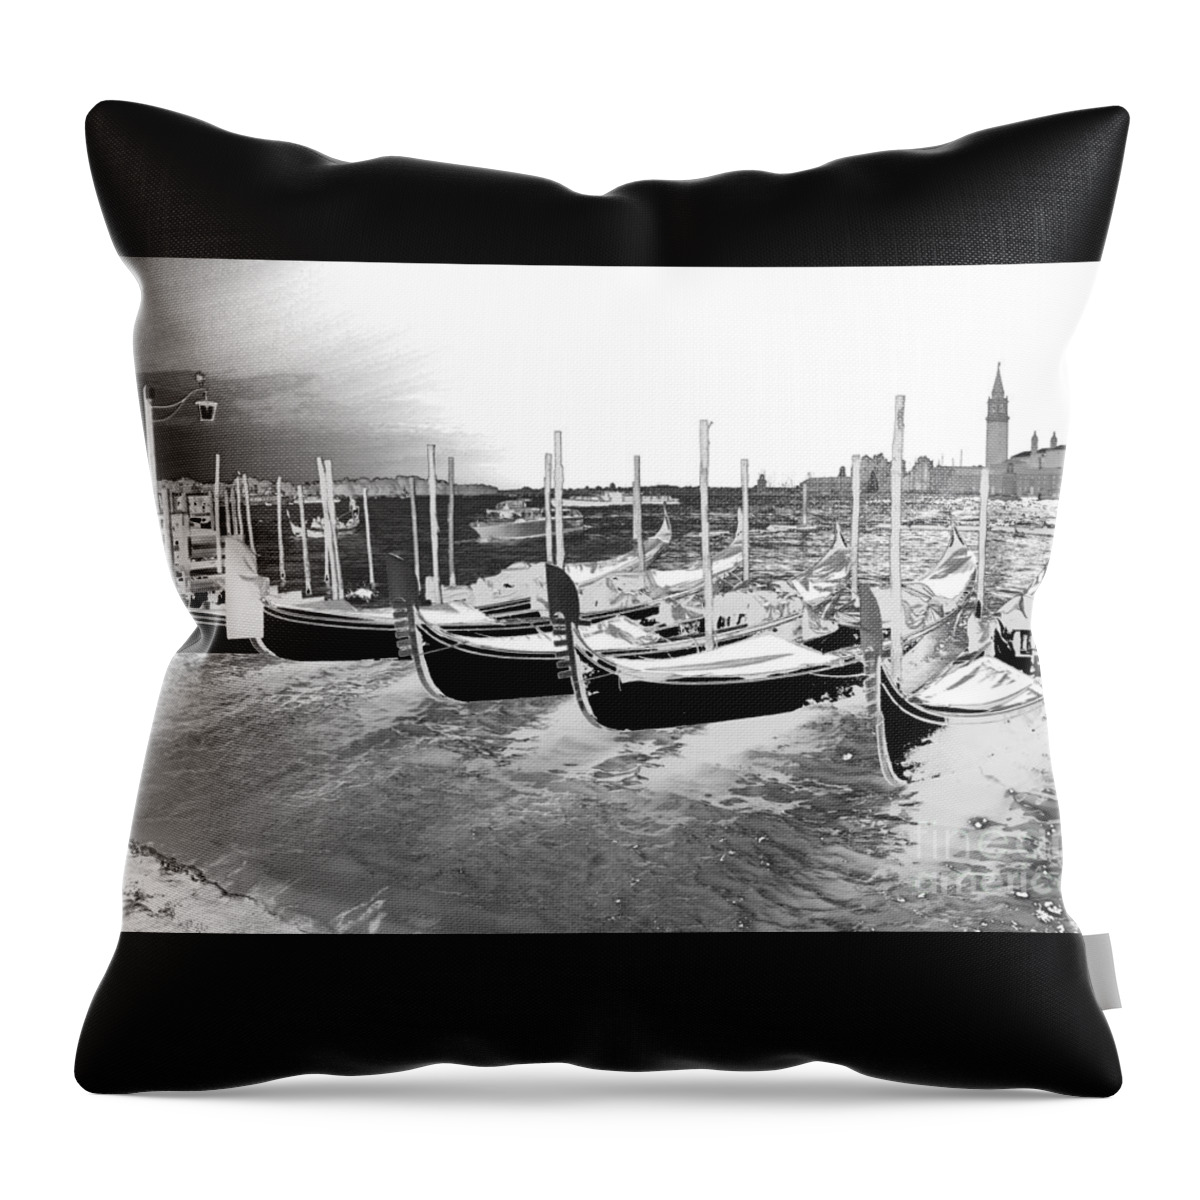 Gondolas Throw Pillow featuring the photograph Venice gondolas silver by Rebecca Margraf